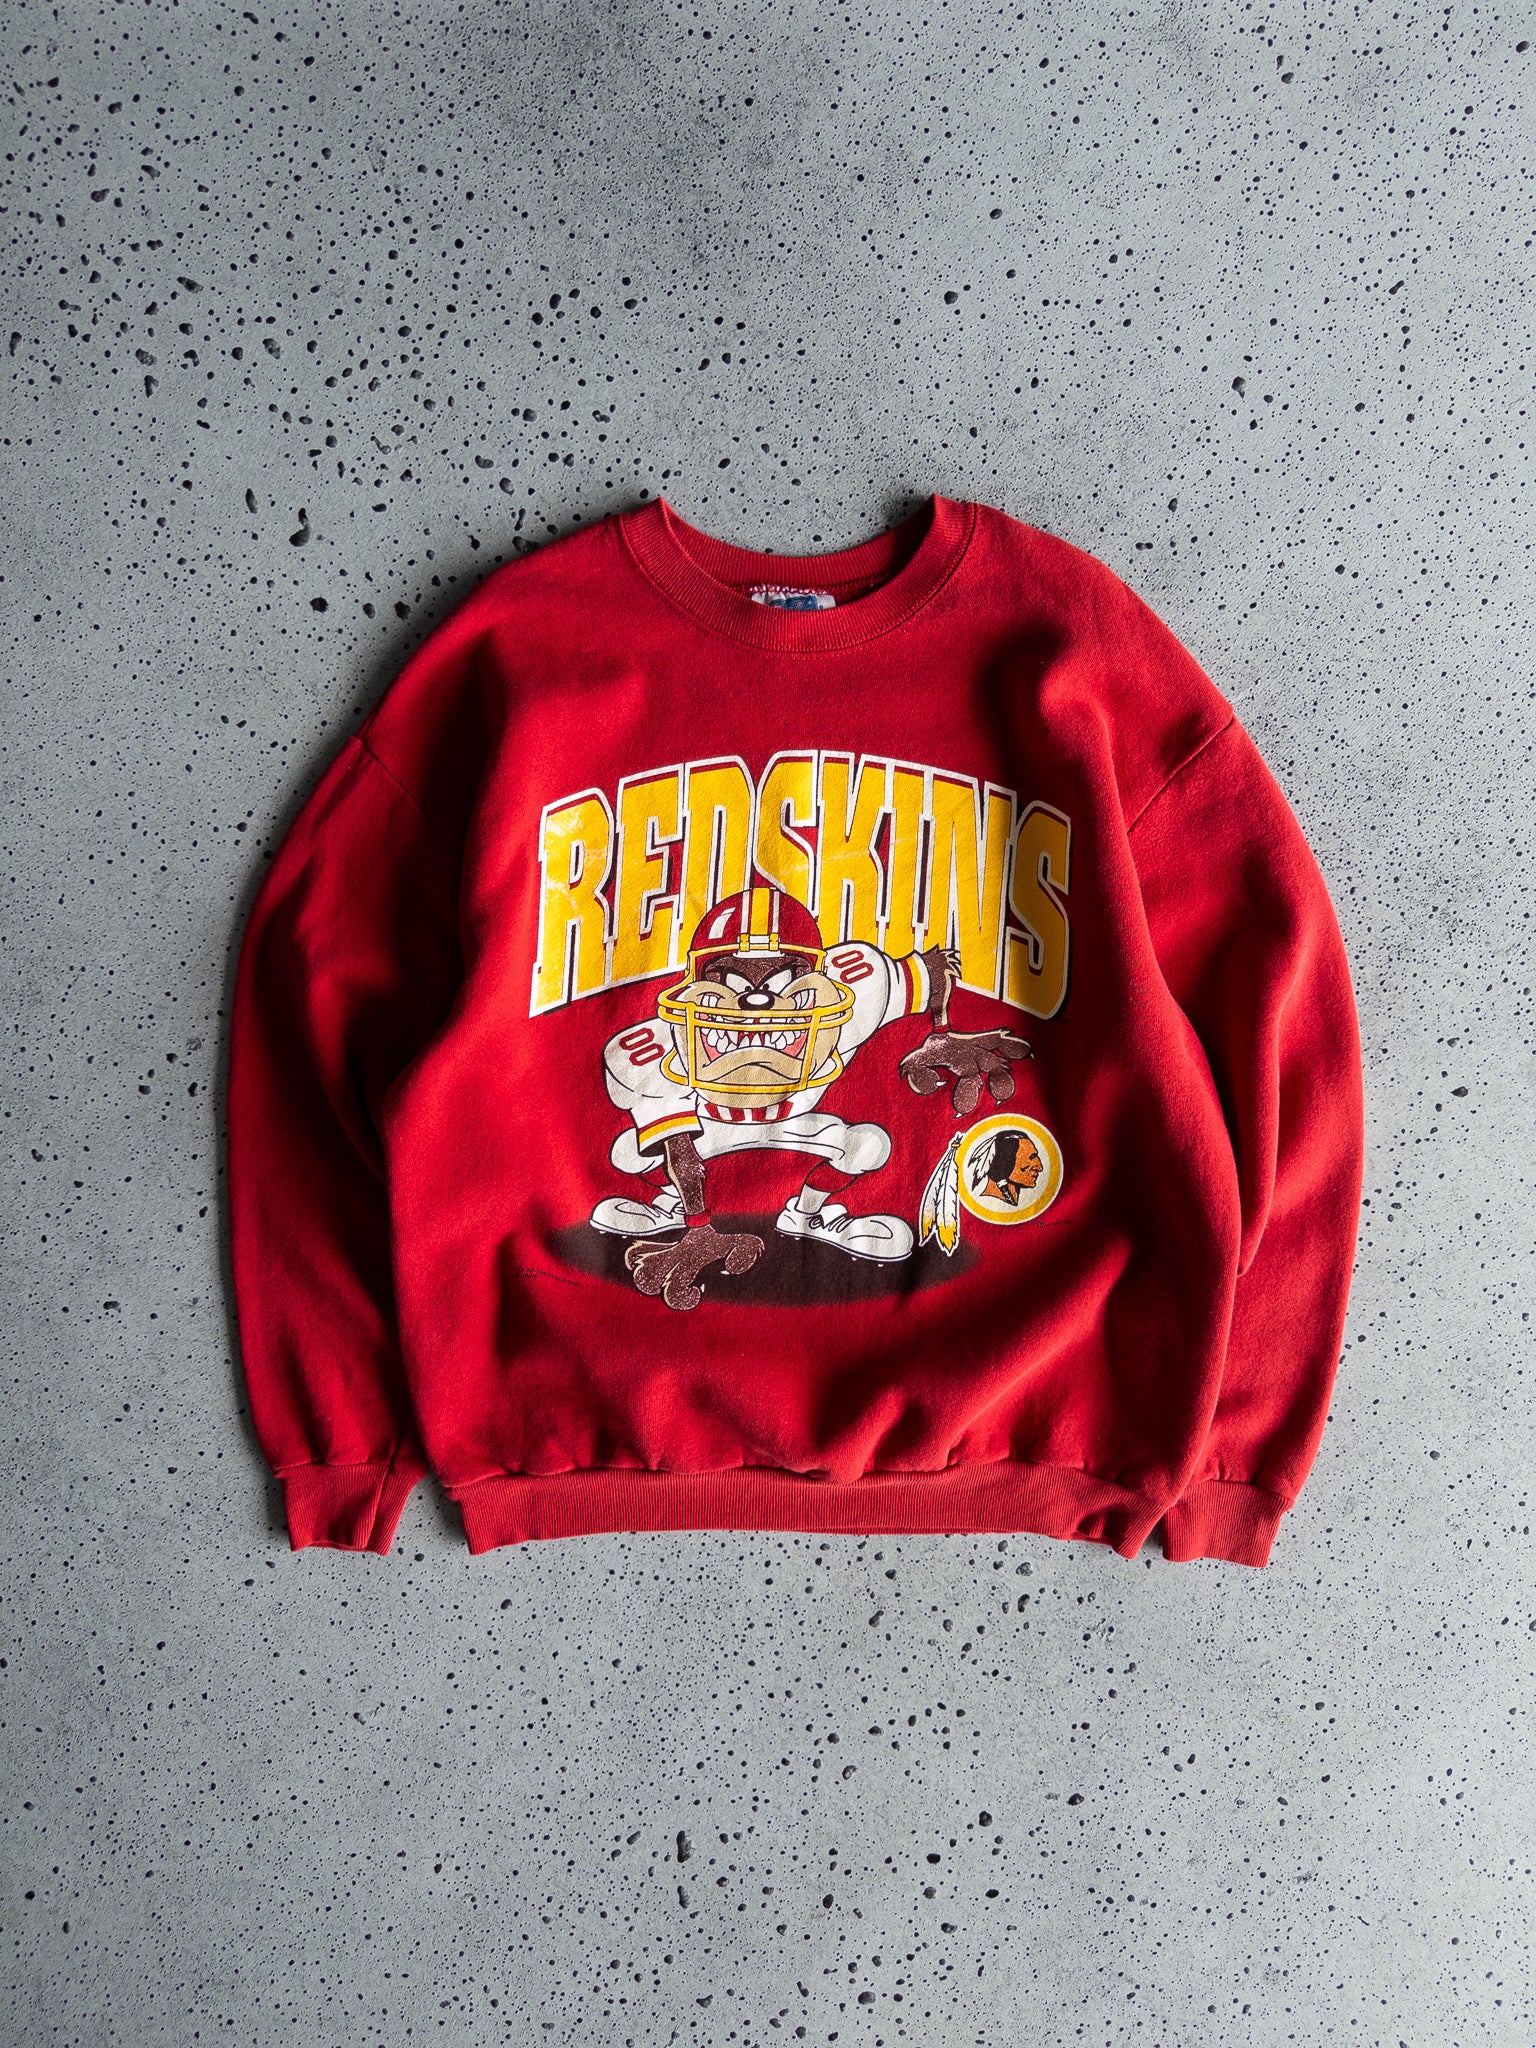 Vintage Redskins 1996 Sweatshirt (L)